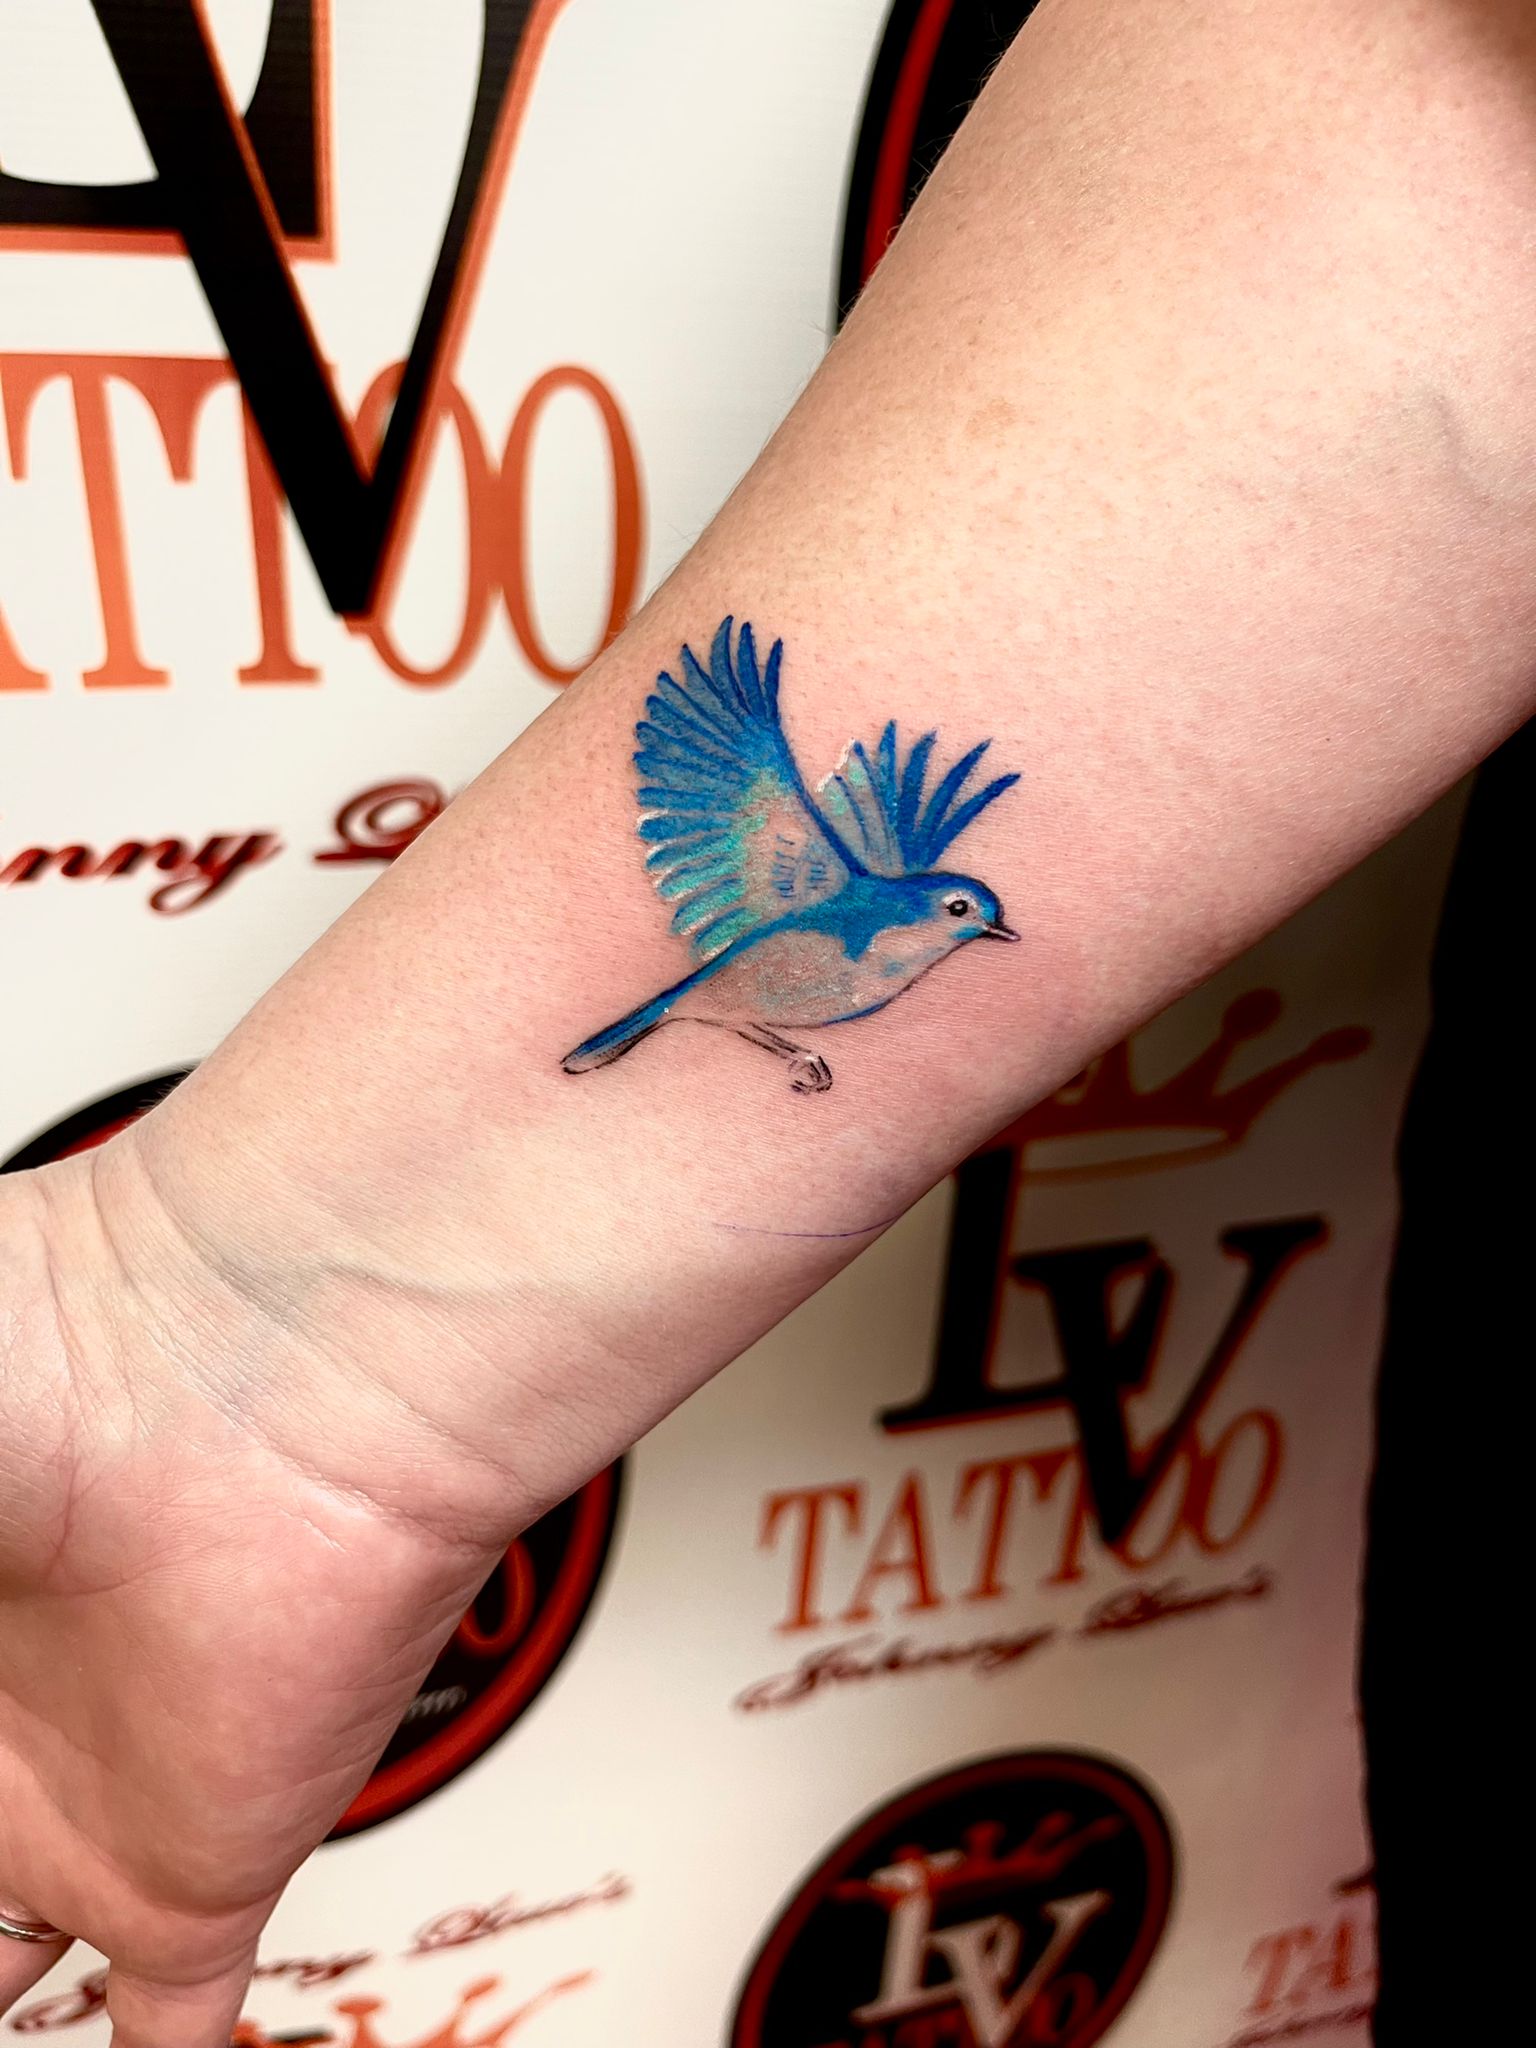 LV Tattoo on X: "Little bluebird done by Valerie @sachkoart on insta #tattoo #tattoodo #tattoolove #tattoolife #ink #inked #inkedup #inklove #inklife #tattooscomeincolor #colortattoo #birdtattoo #bluebird #bluebirdtattoo #blue #cute #cutetattoo ...